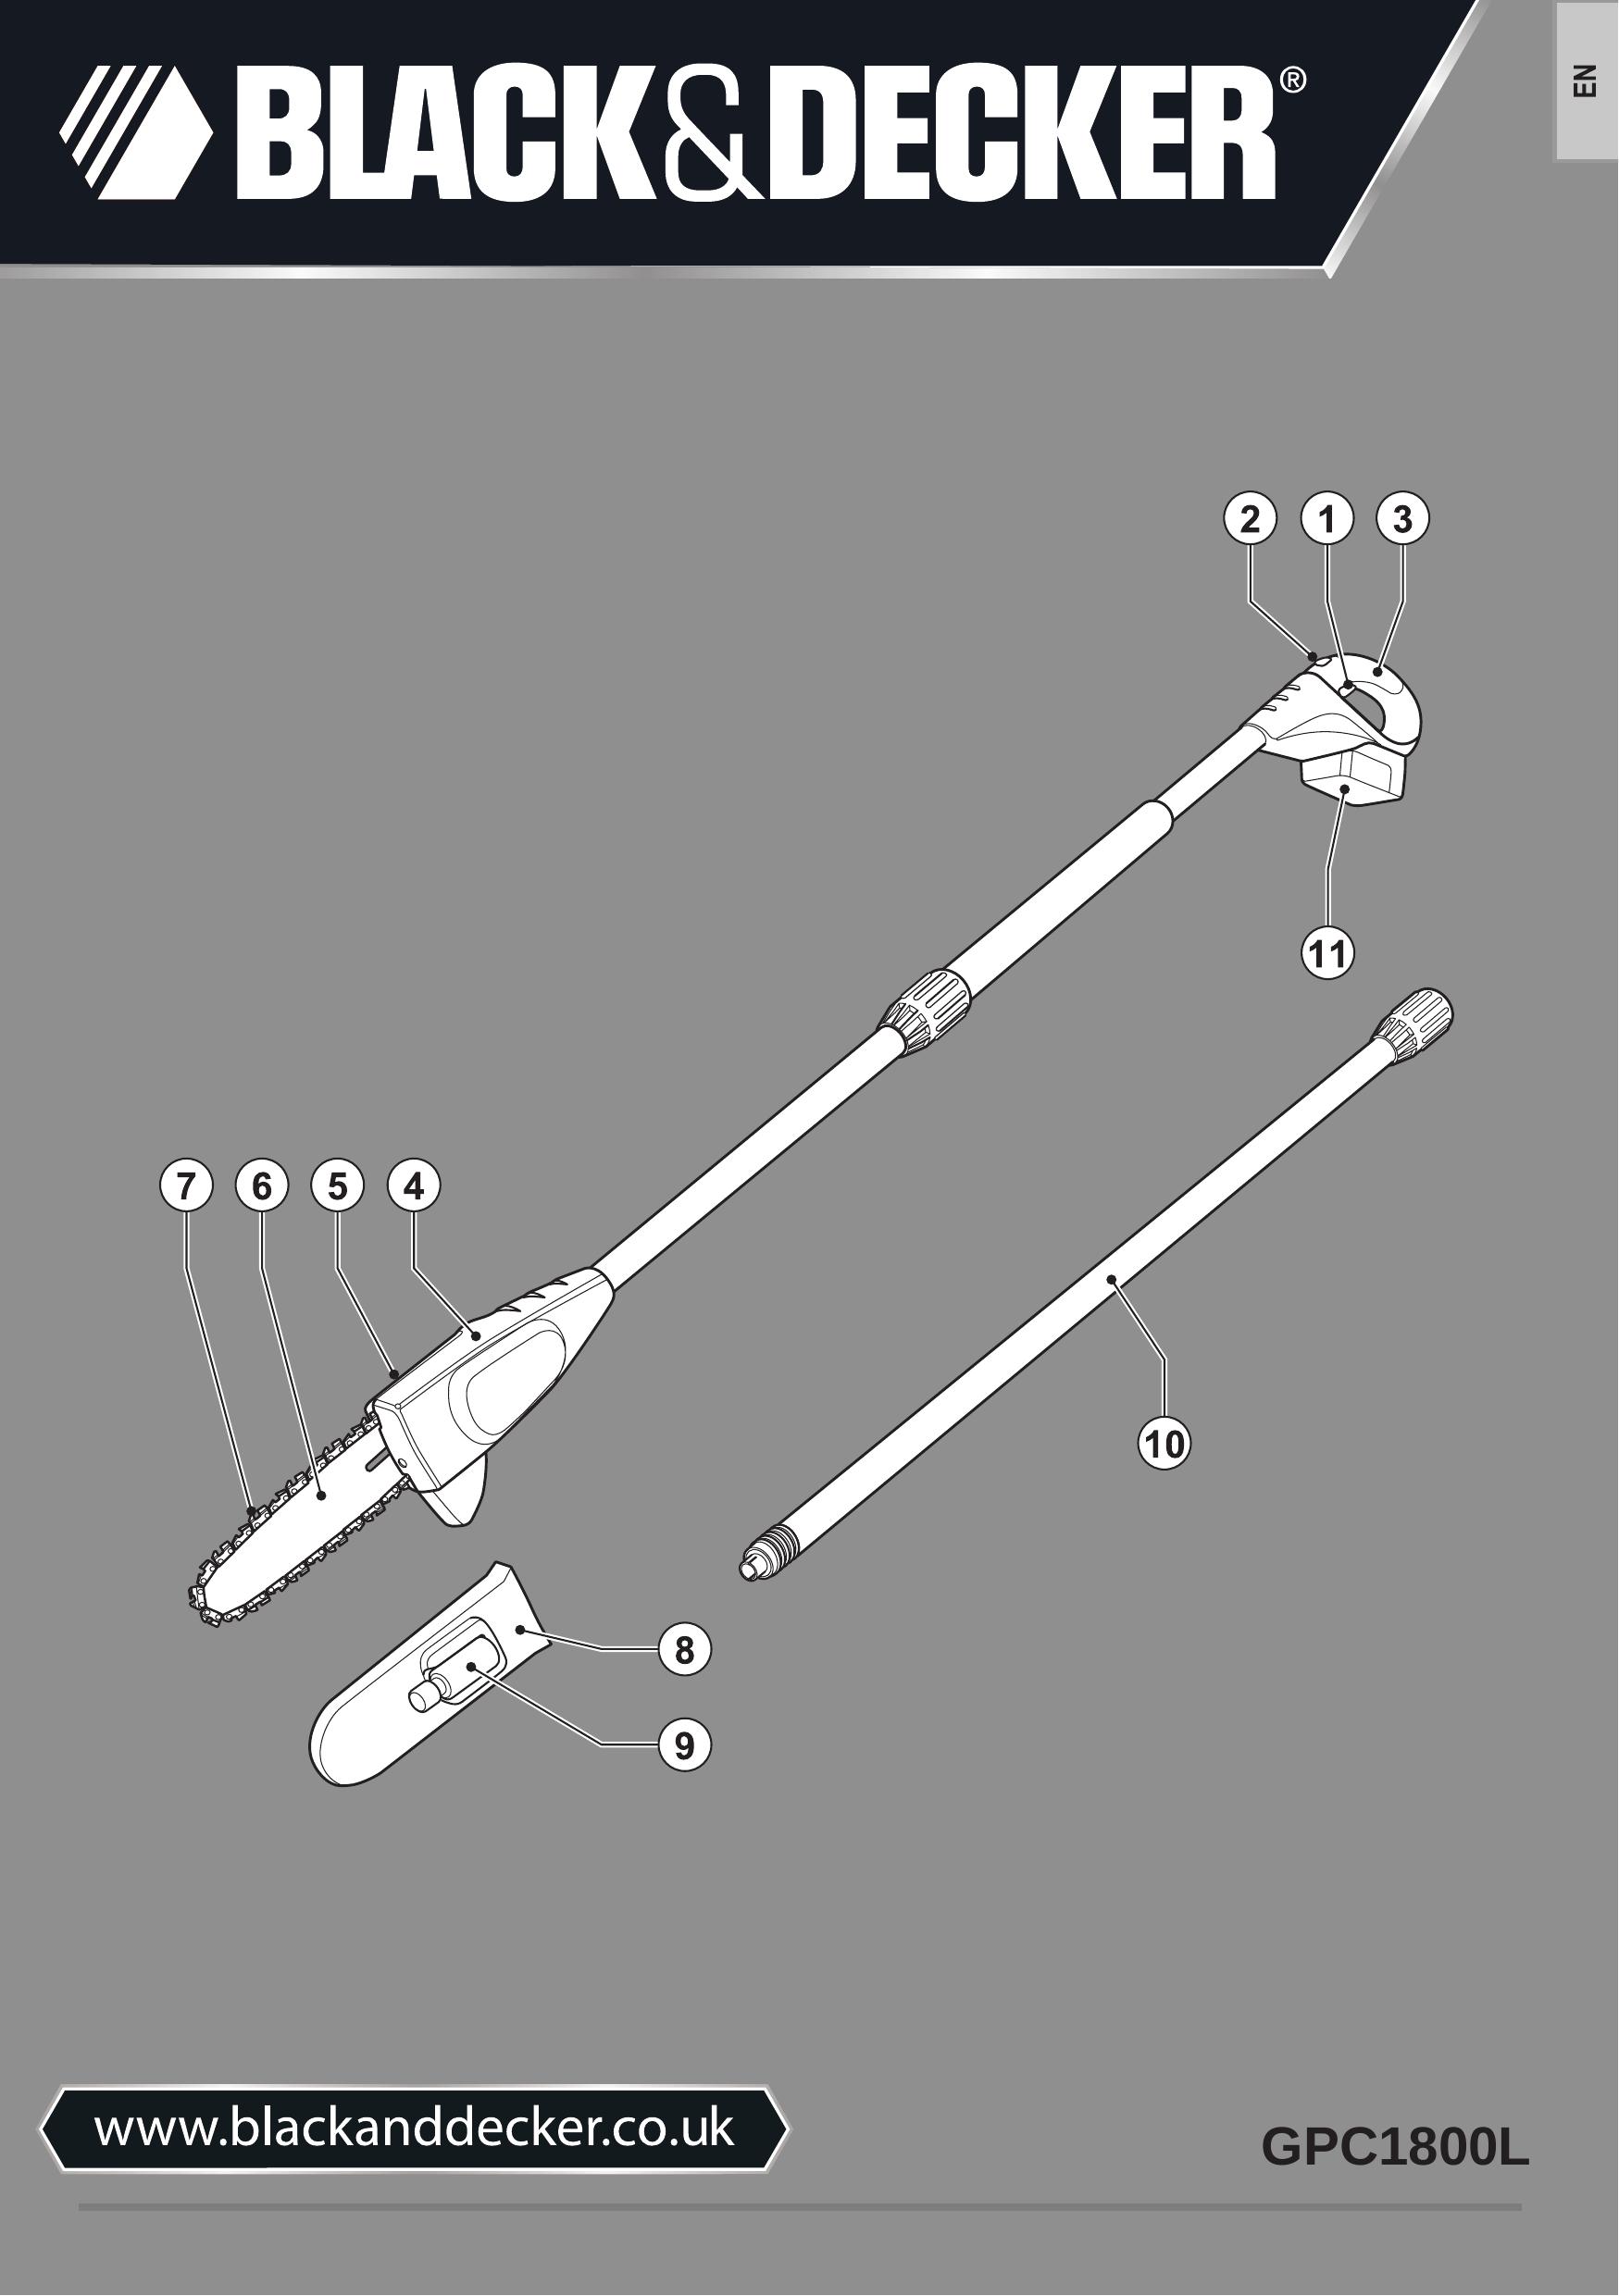 Black & Decker GPC1800L Pole Saw User Manual